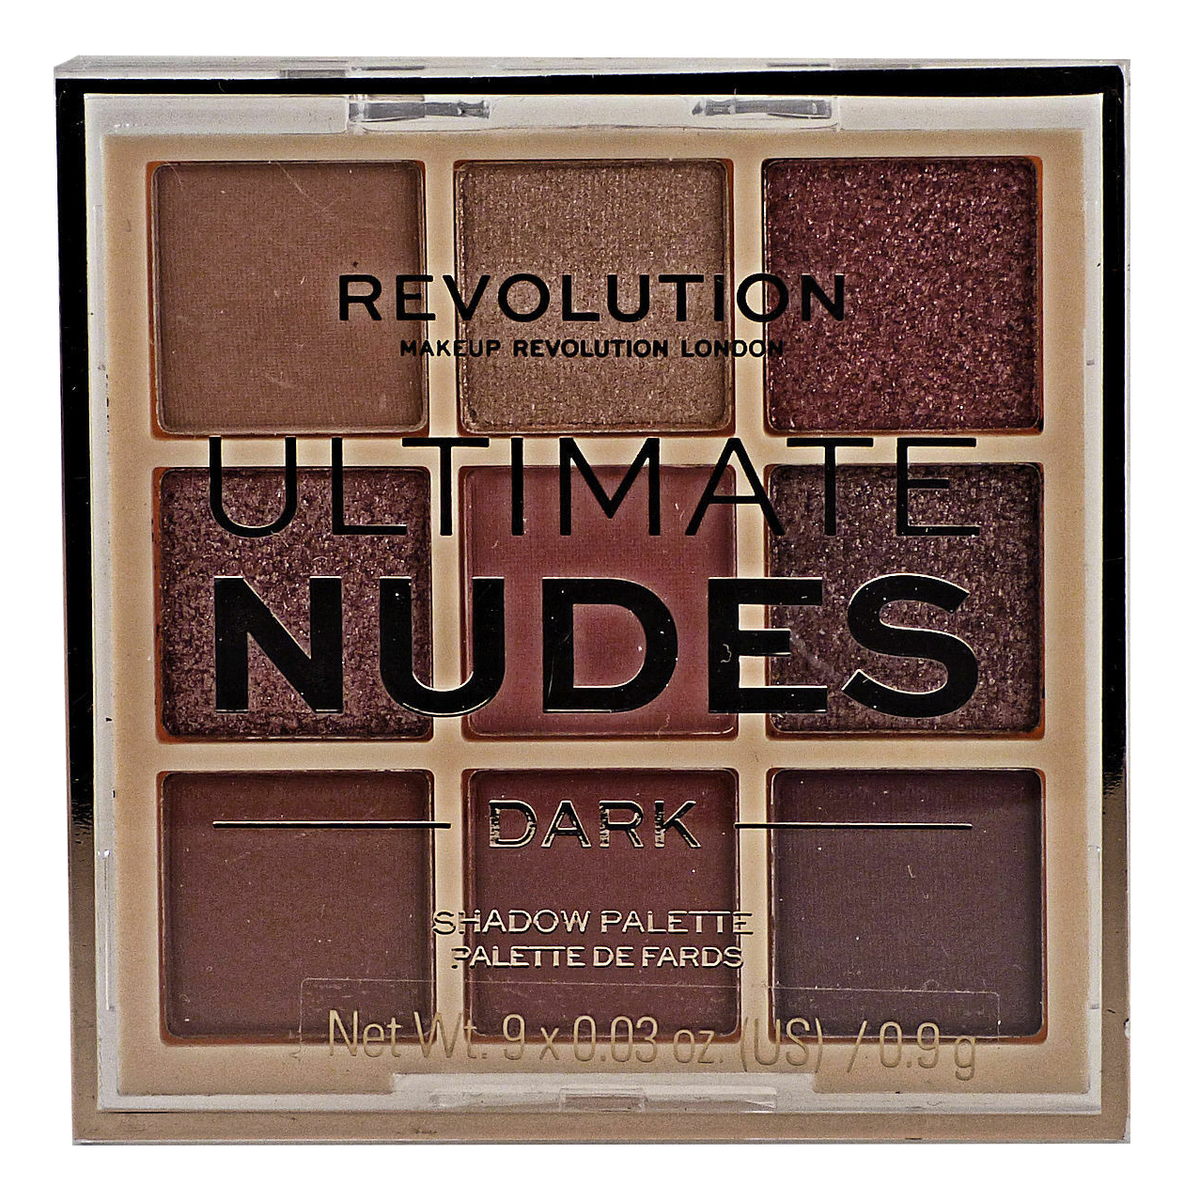 Палетка теней для век Ultimate Nudes Eyeshadow Palette 8,1г: Dark too faced born this way the natural nudes палетка теней для век the natural nudes